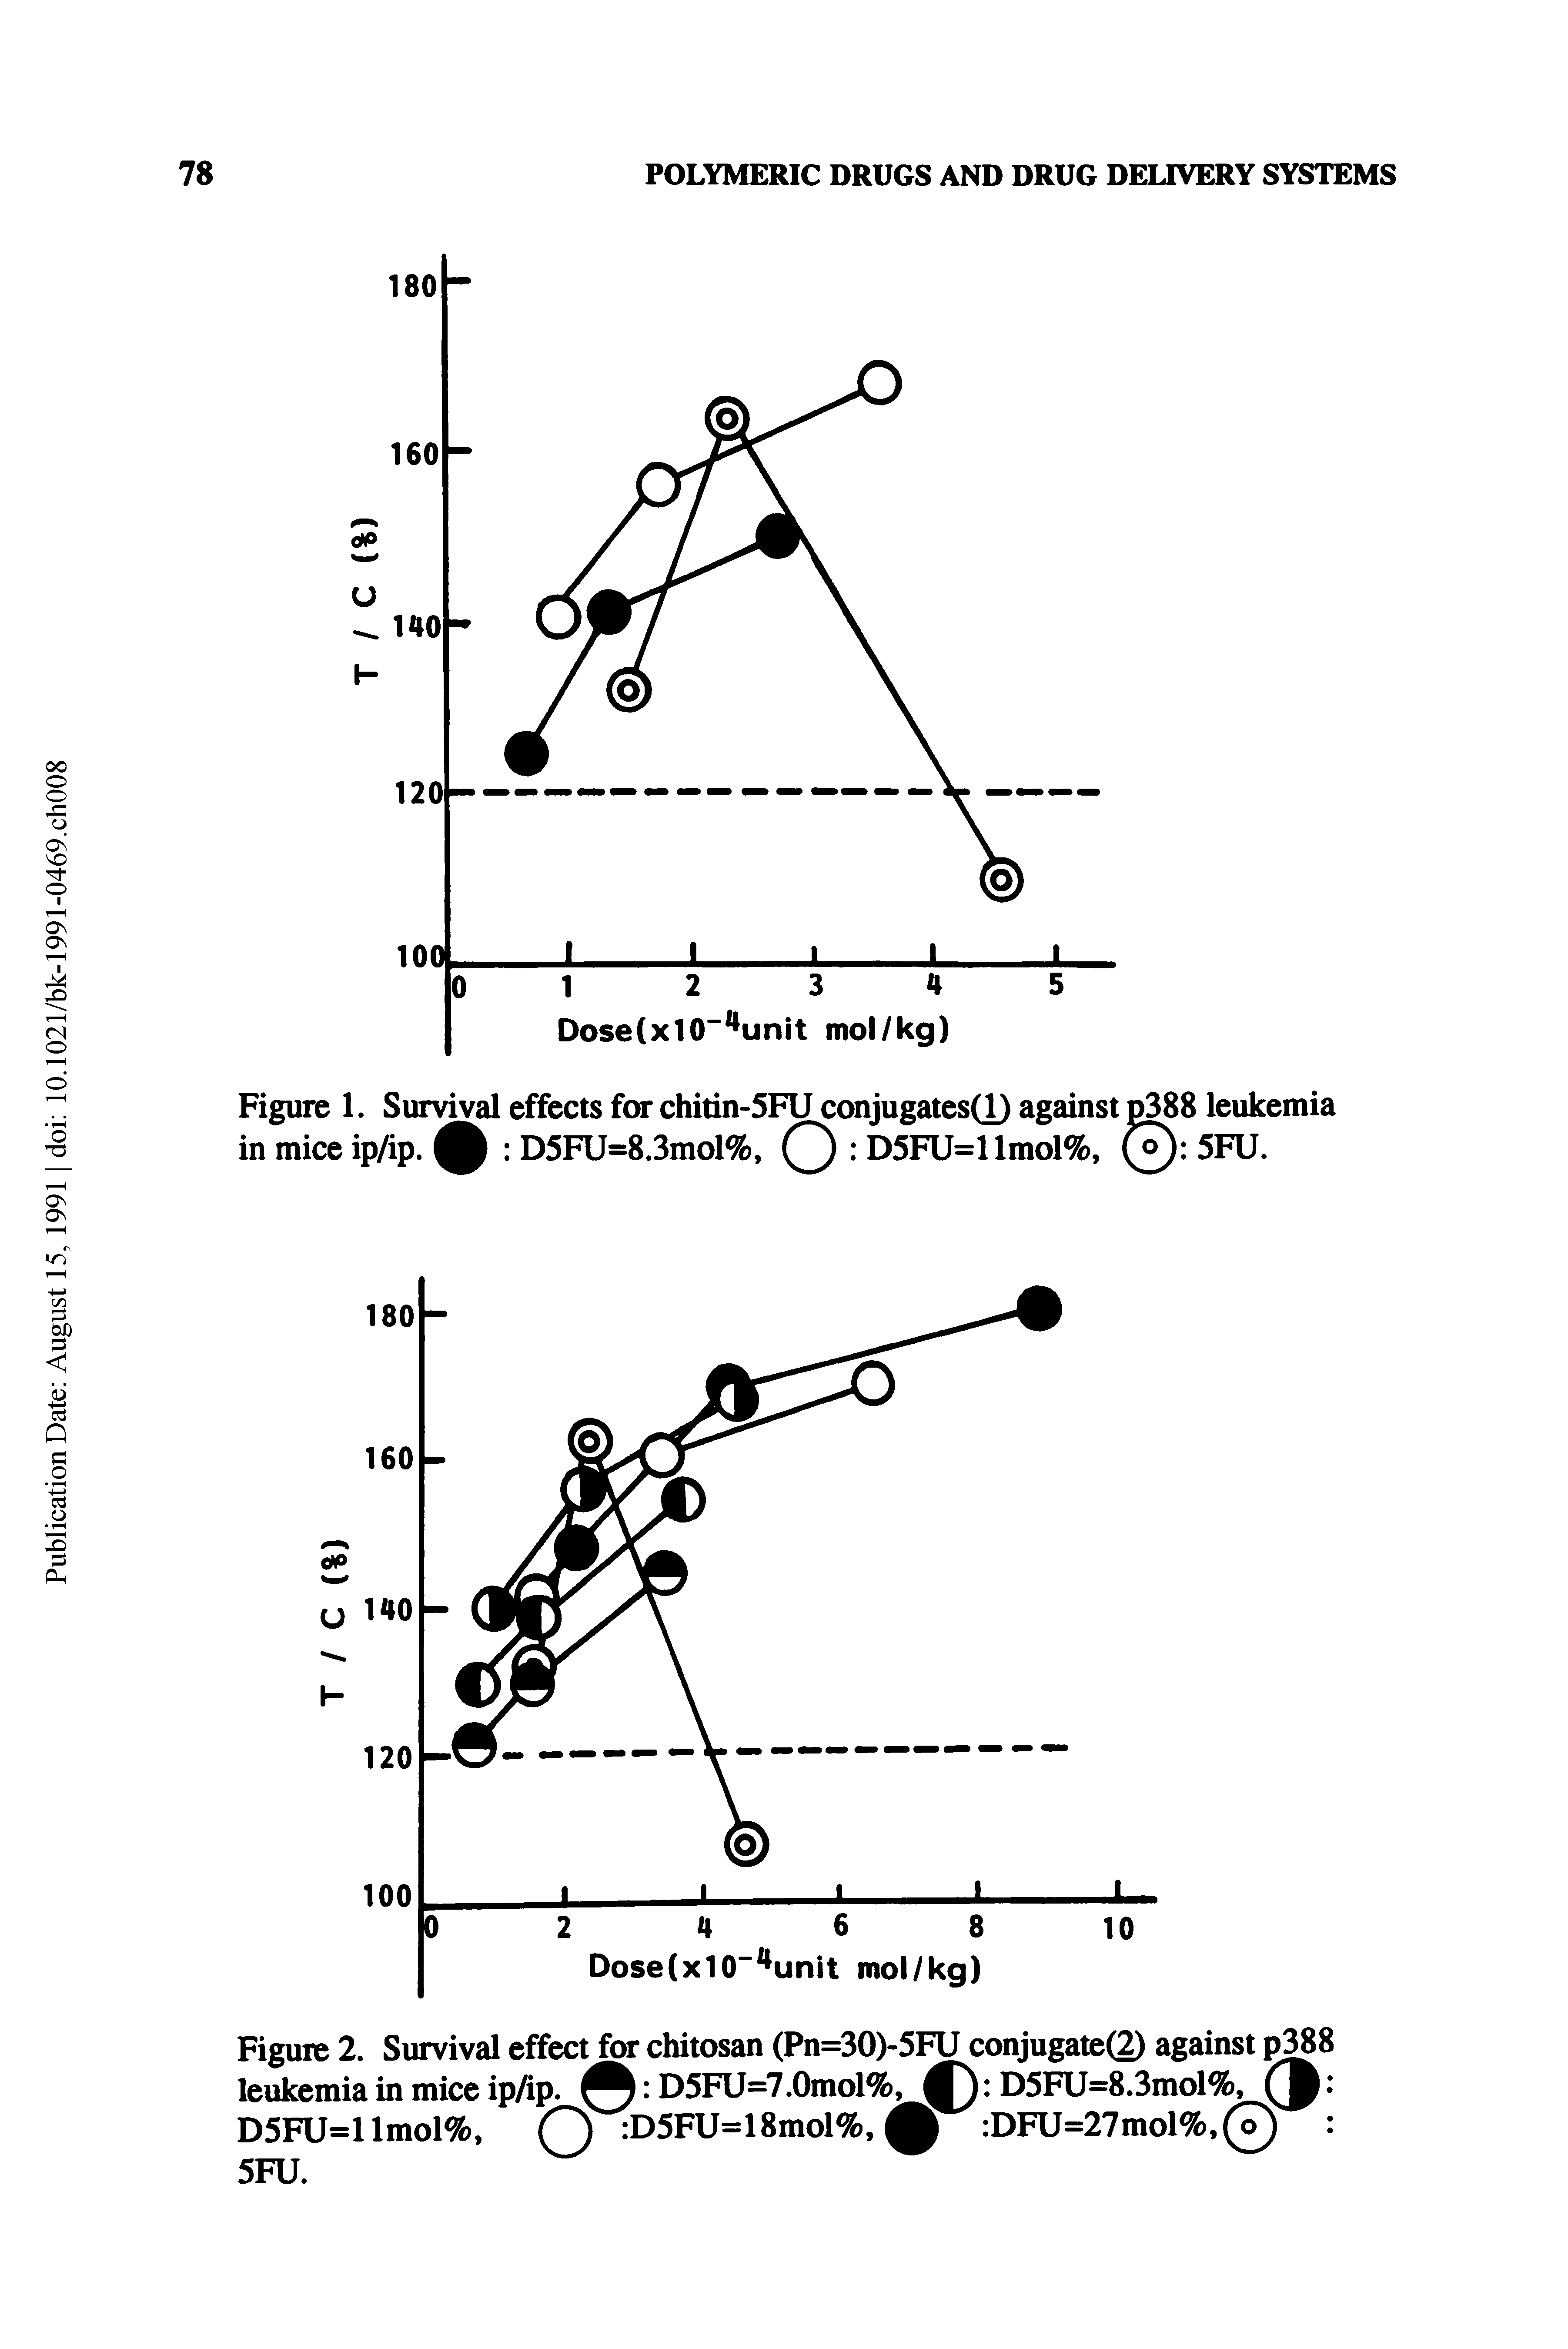 Figure 1. Survival effects for chitin-5FU conjugates(l) against p388 leukemia in mice ip/ip. D5FU=8.3mol%, D5FU=llmol%, (°) 5FU.